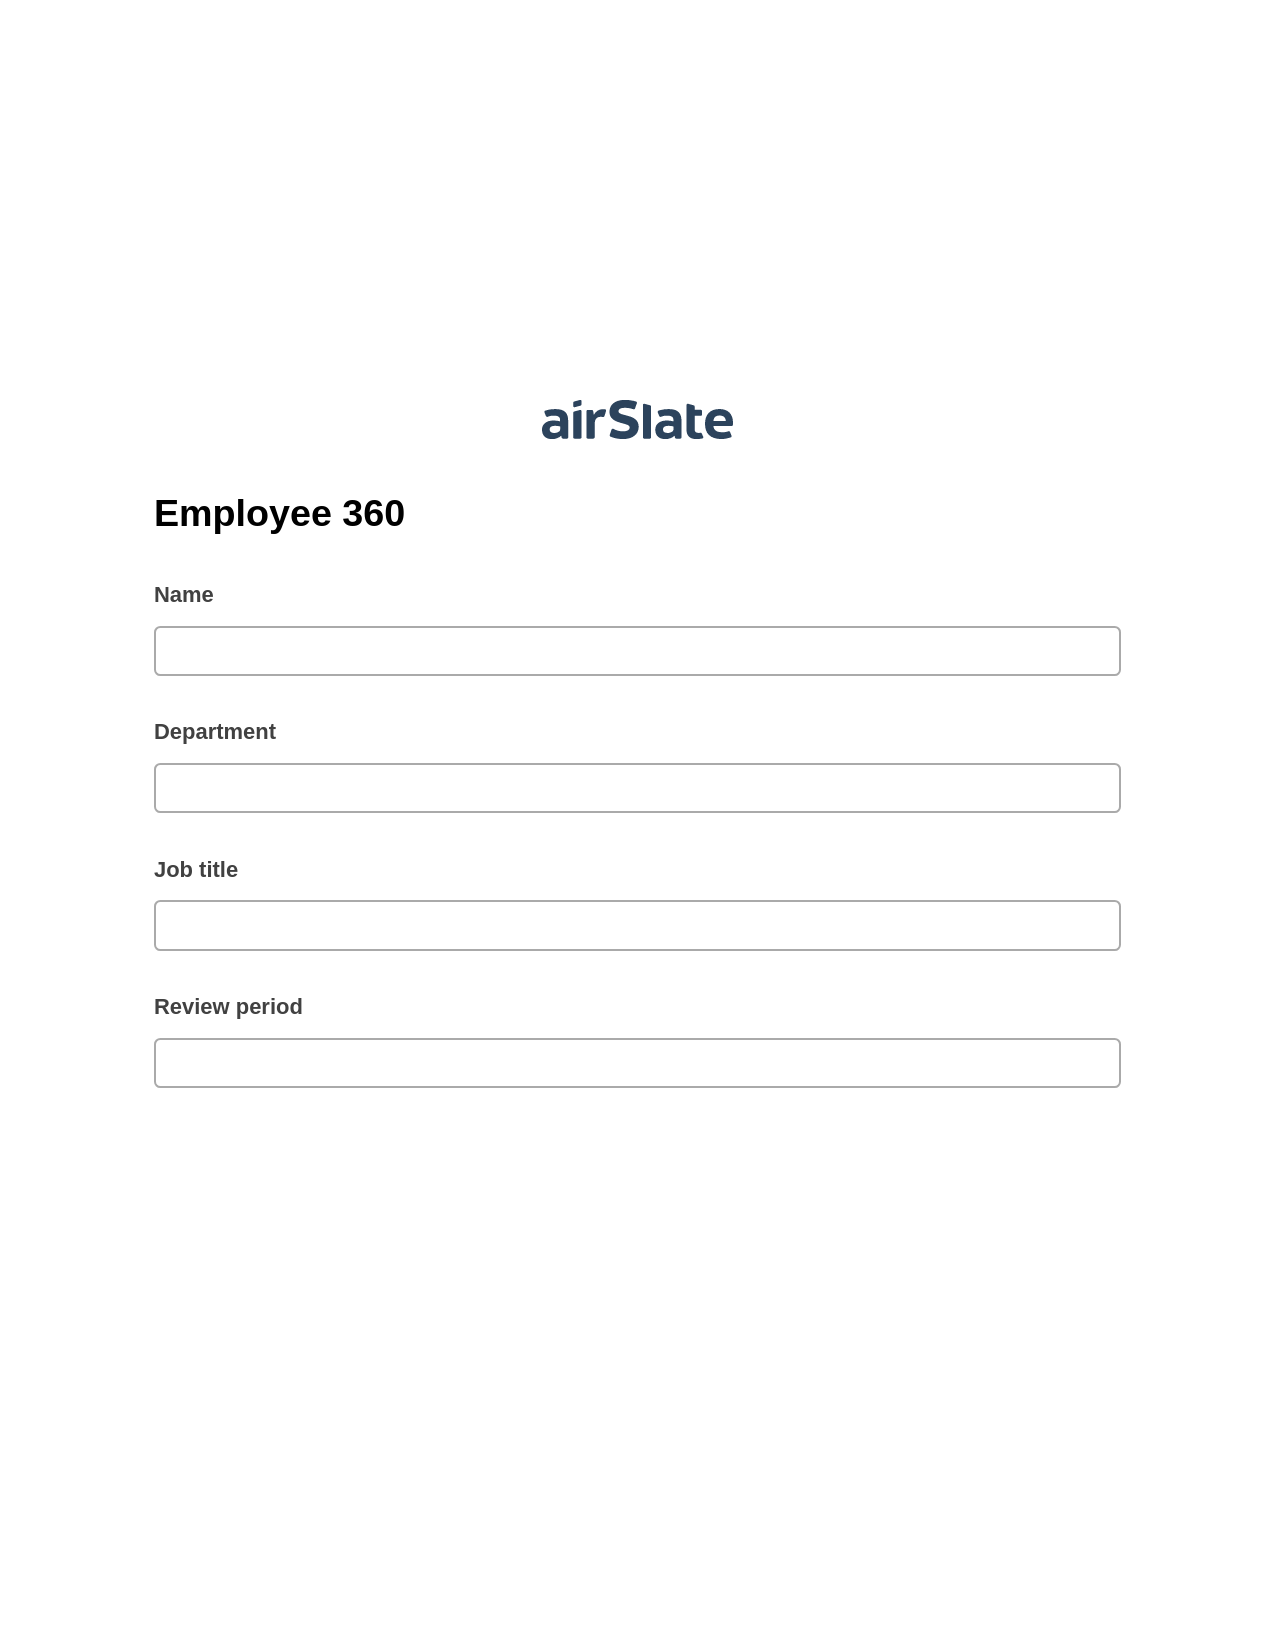 Multirole Employee 360 Prefill from NetSuite records, Update Audit Trail Bot, Webhook Postfinish Bot